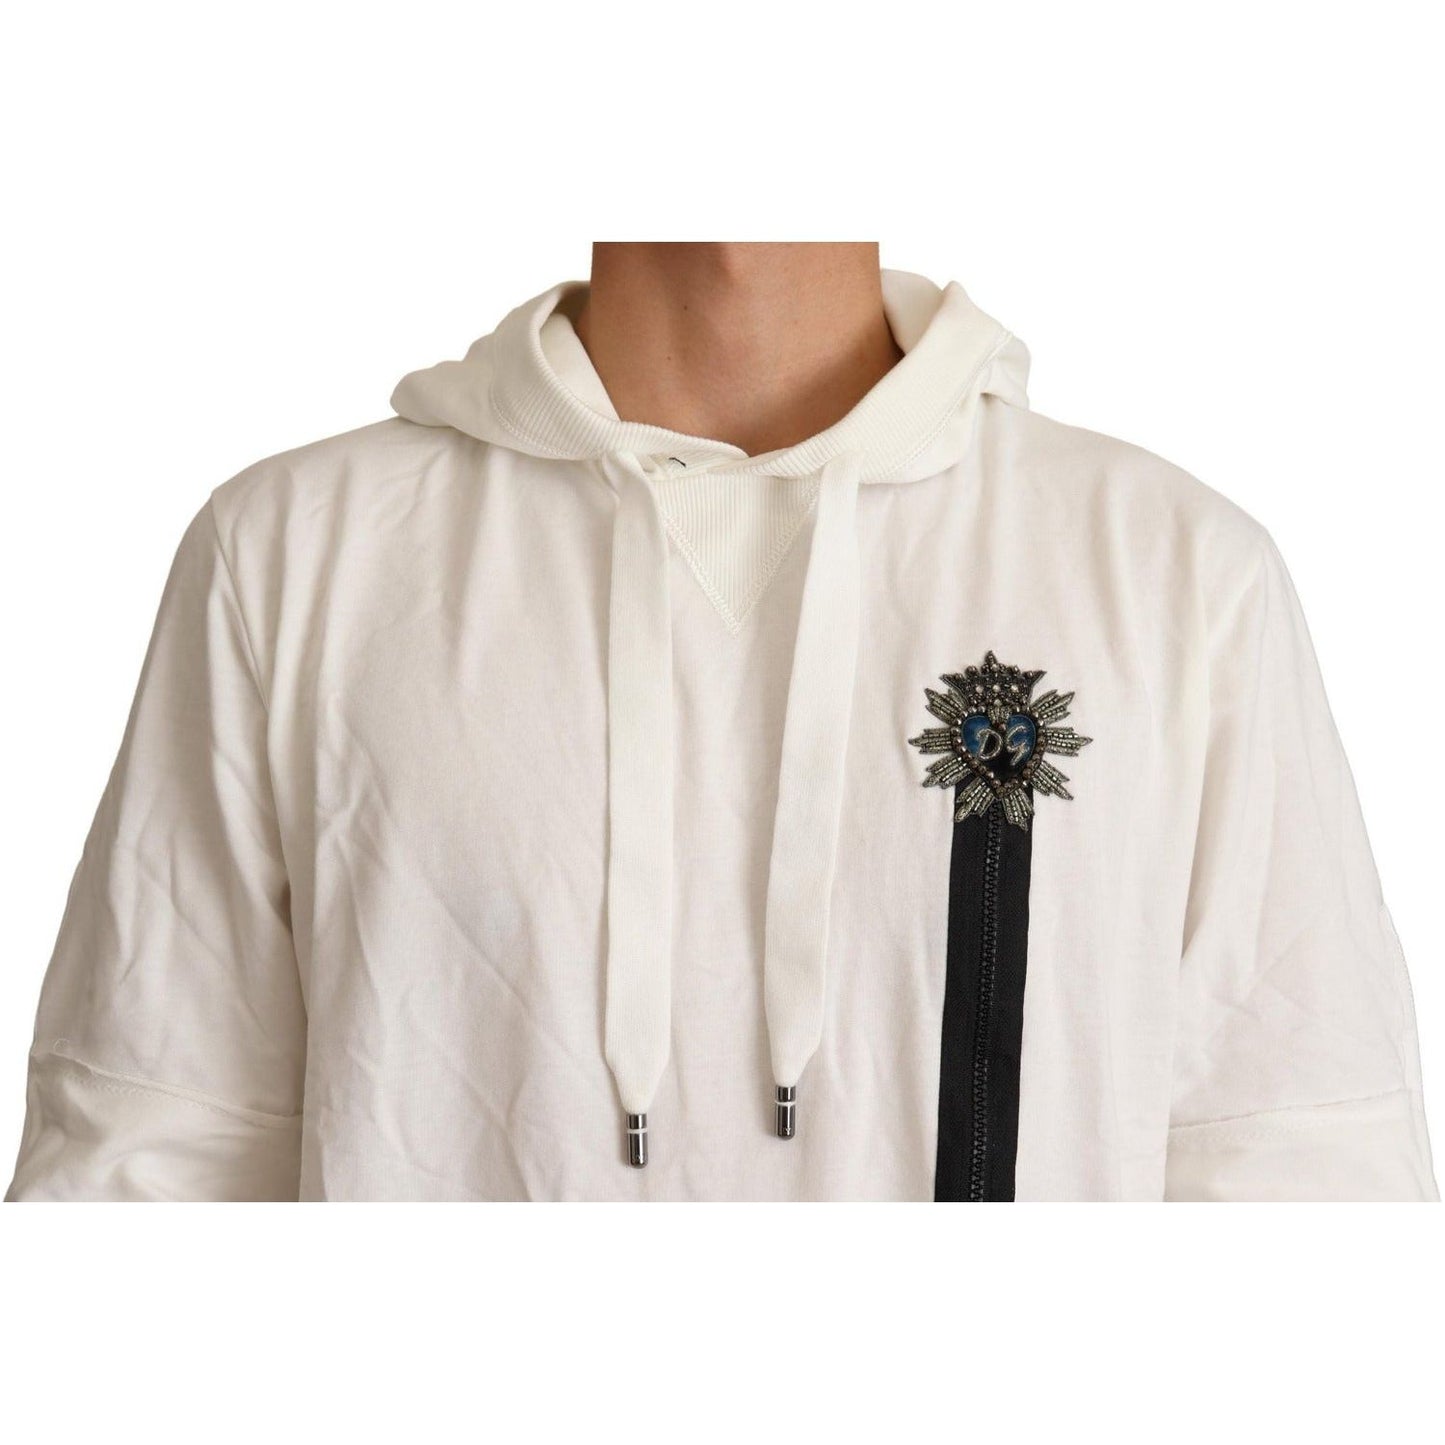 Dolce & GabbanaExquisite Off-White Cotton Hooded SweaterMcRichard Designer Brands£469.00